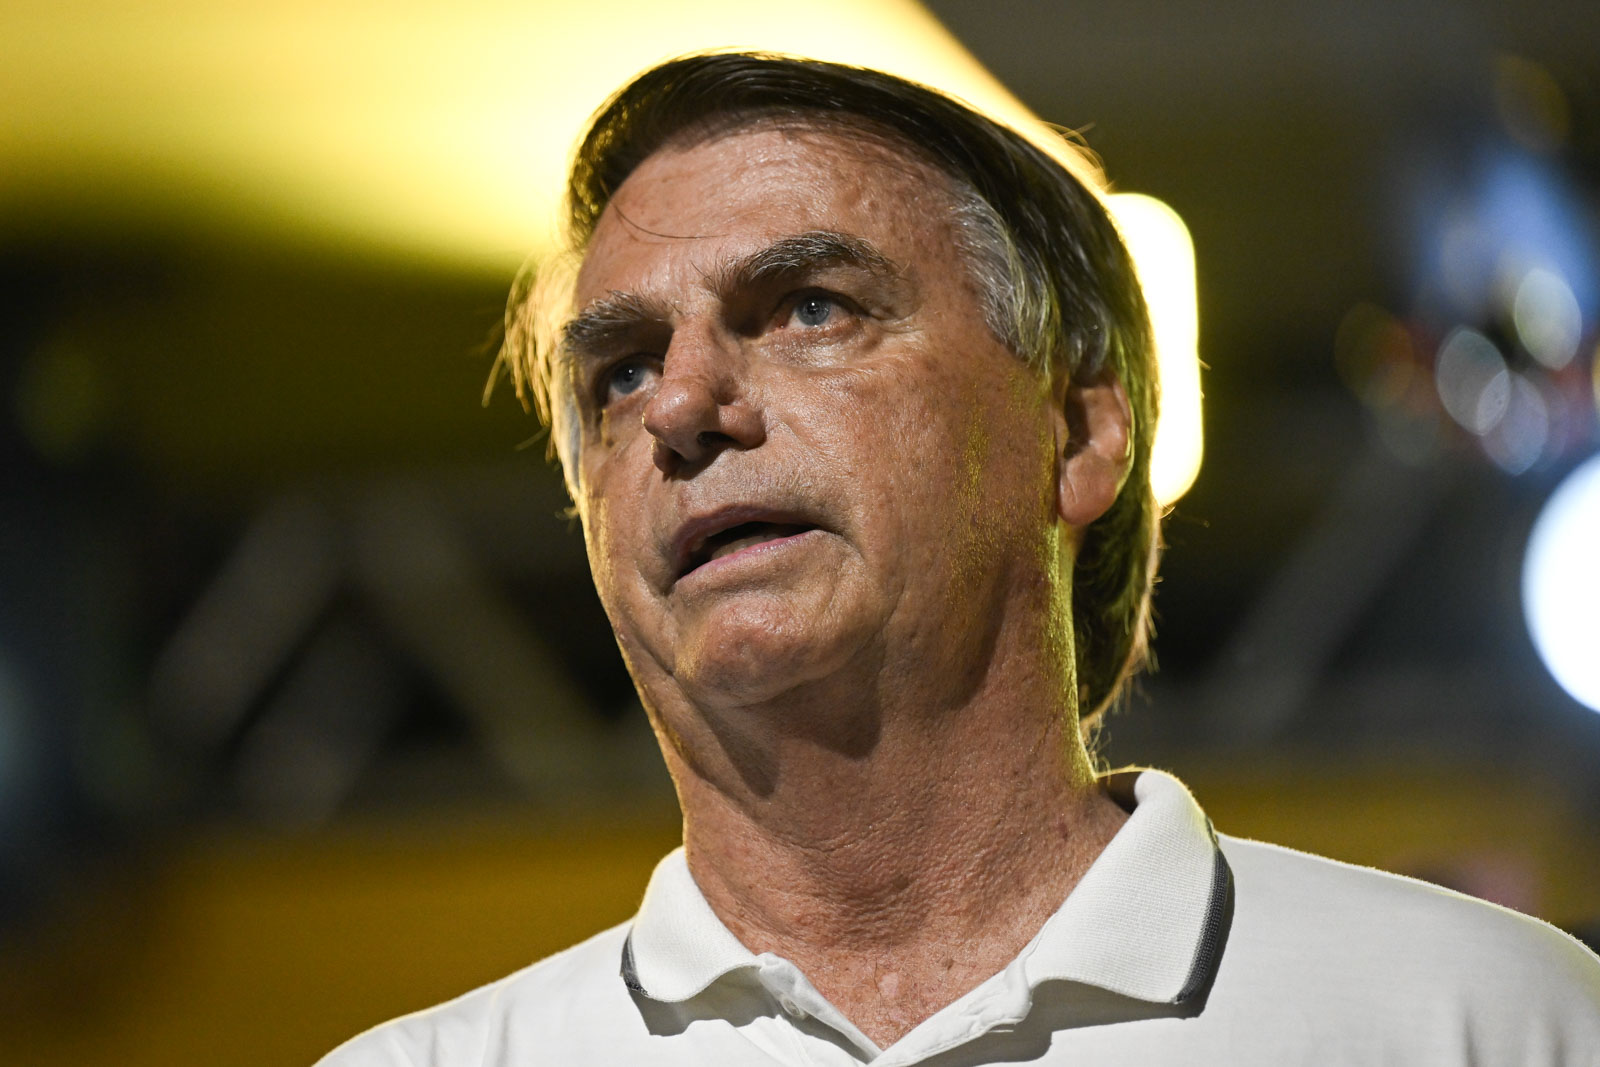 bolsonaro-critica-kassab,-mas-apoiara-candidatos-do-psd-a-prefeito